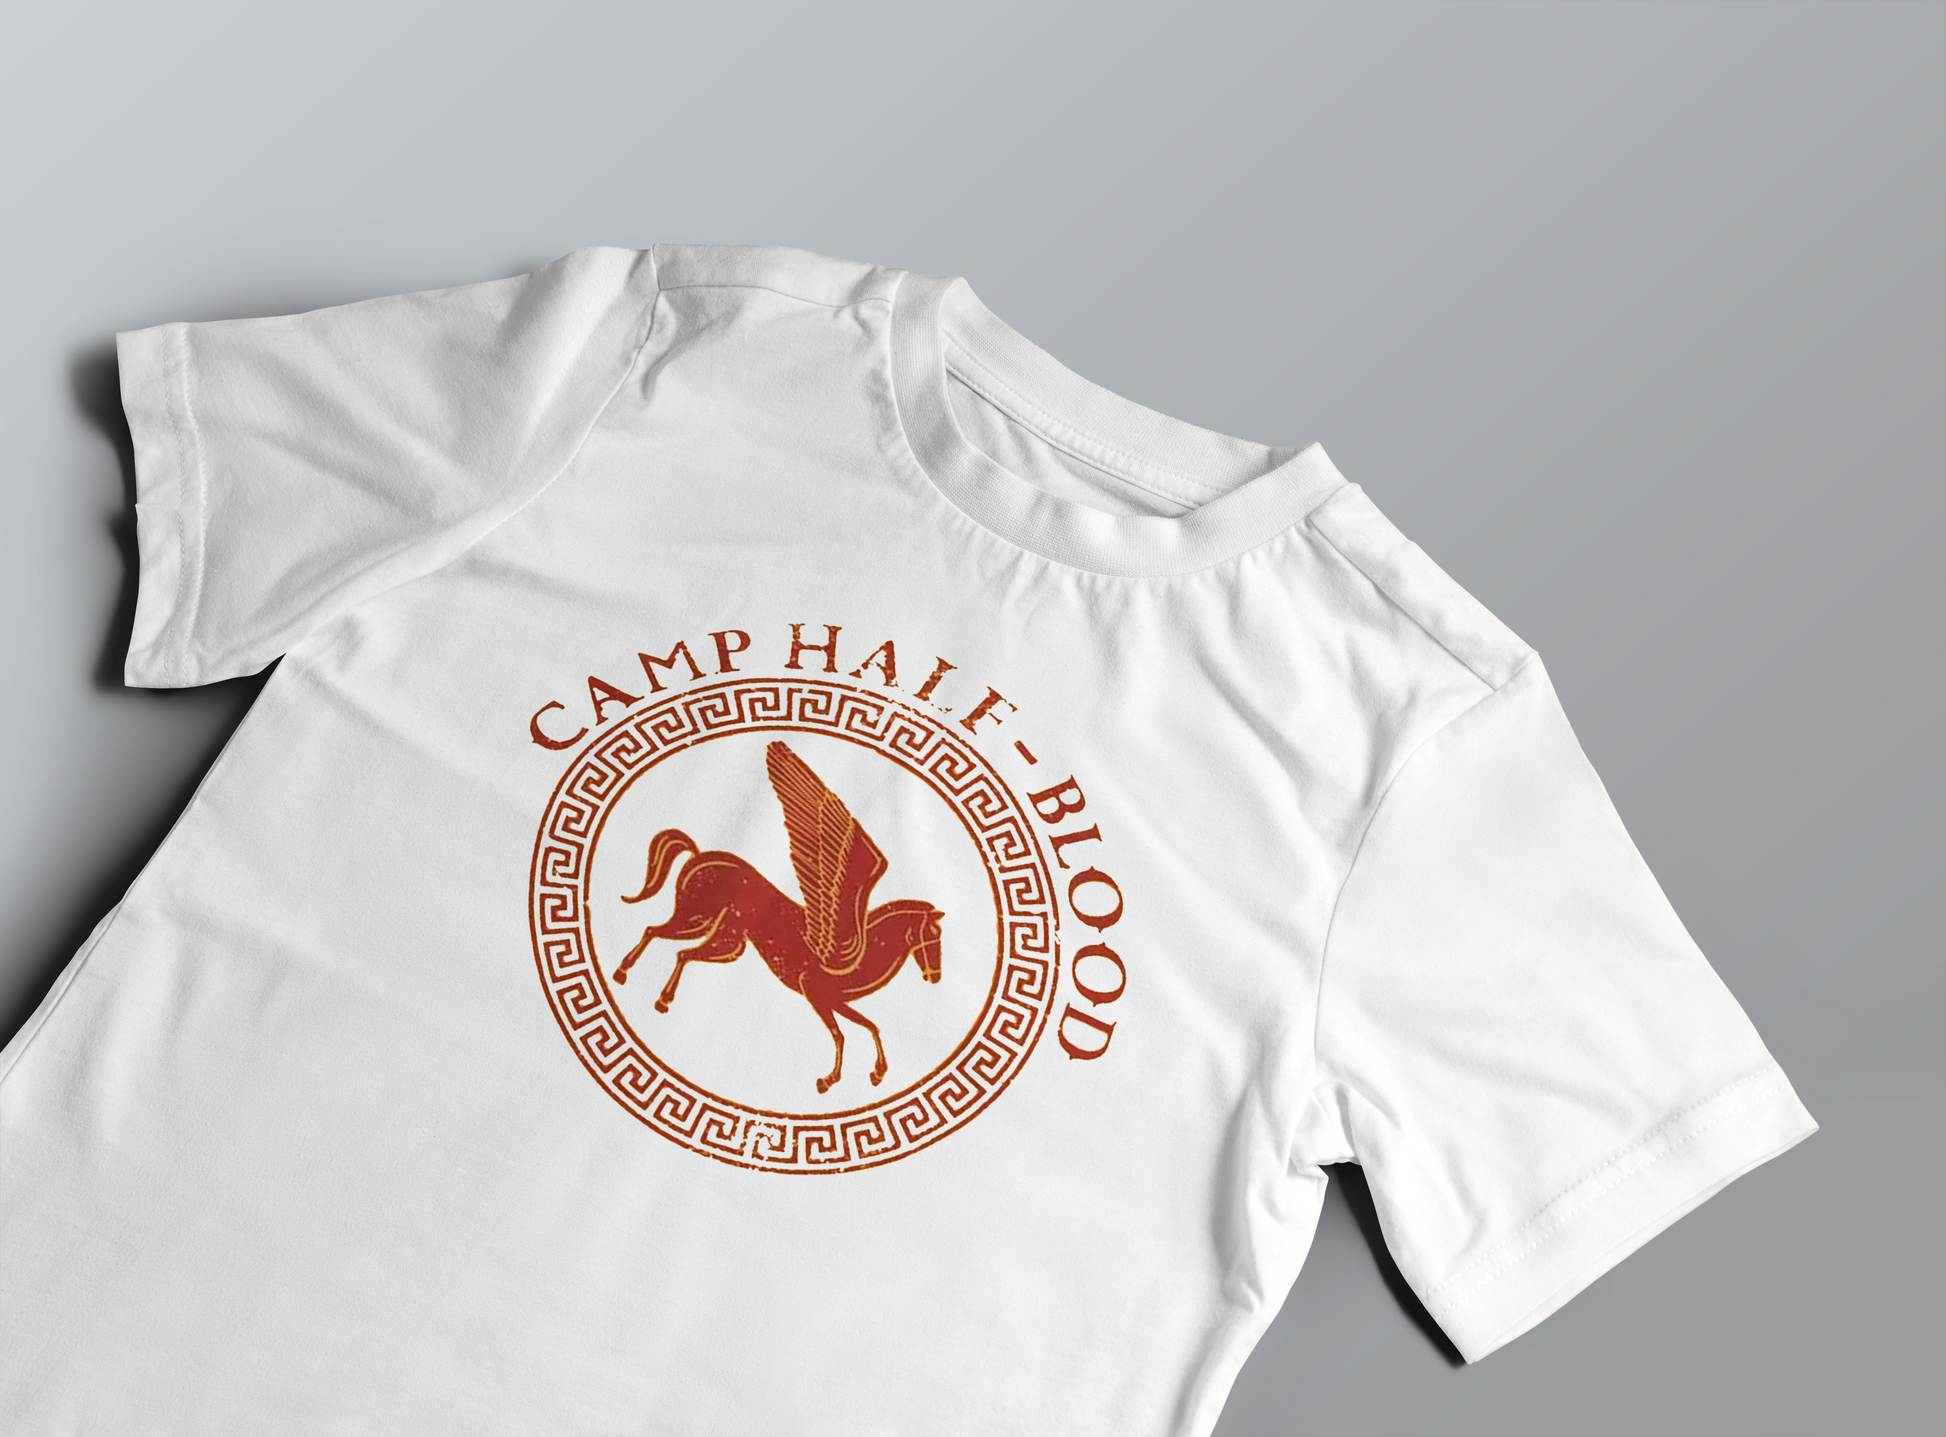 Camiseta Percy Jackson, Acampamento Meio-Sangue